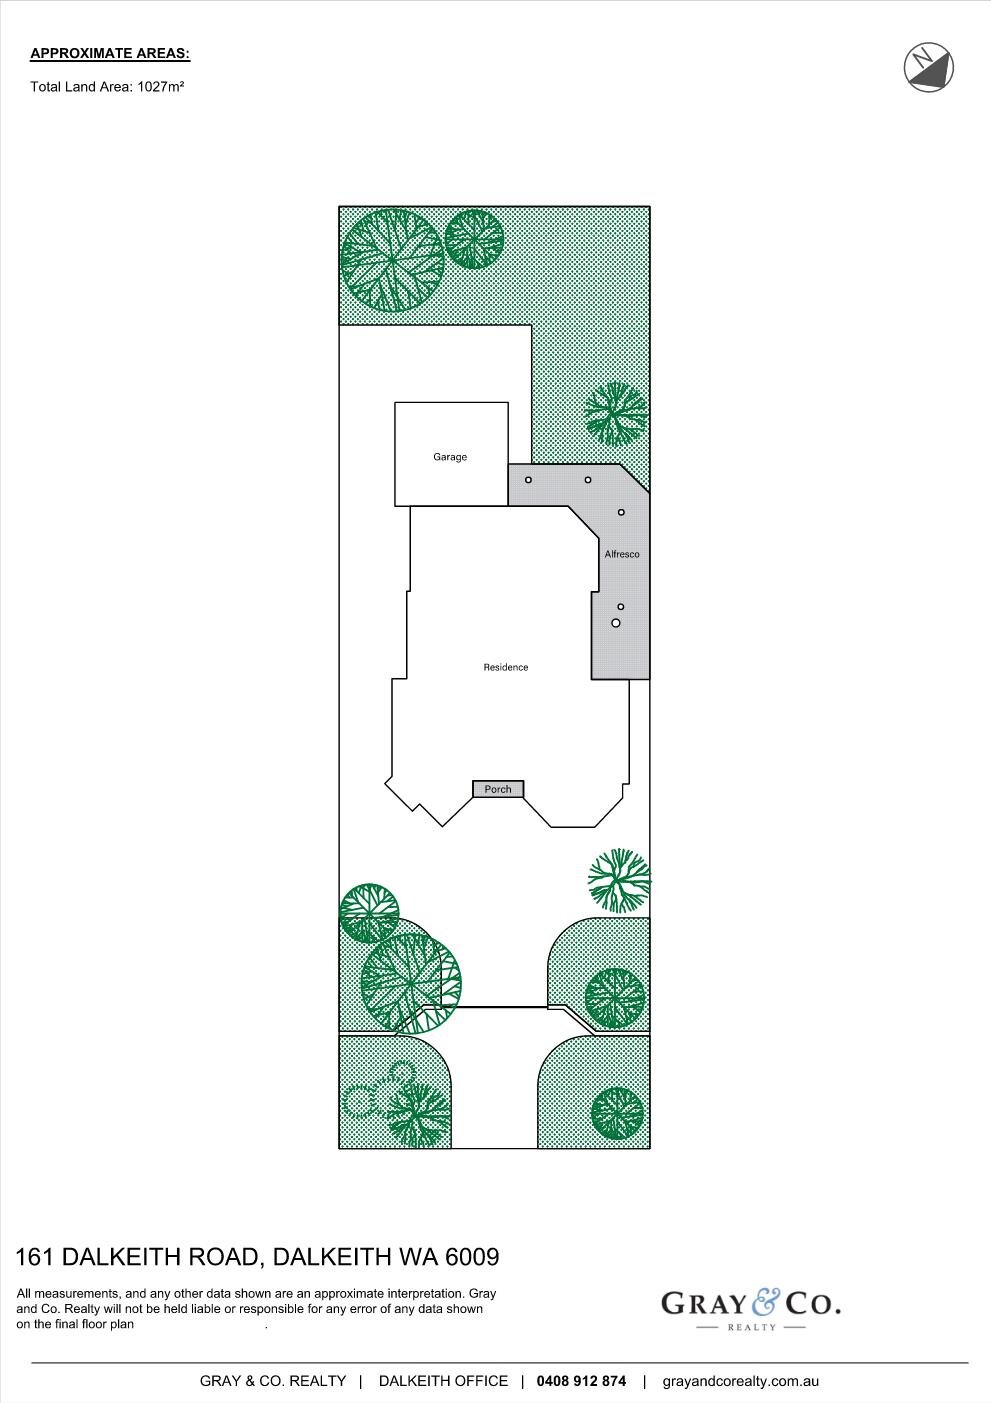 161 Dalkeith Road Site Plan.jpg